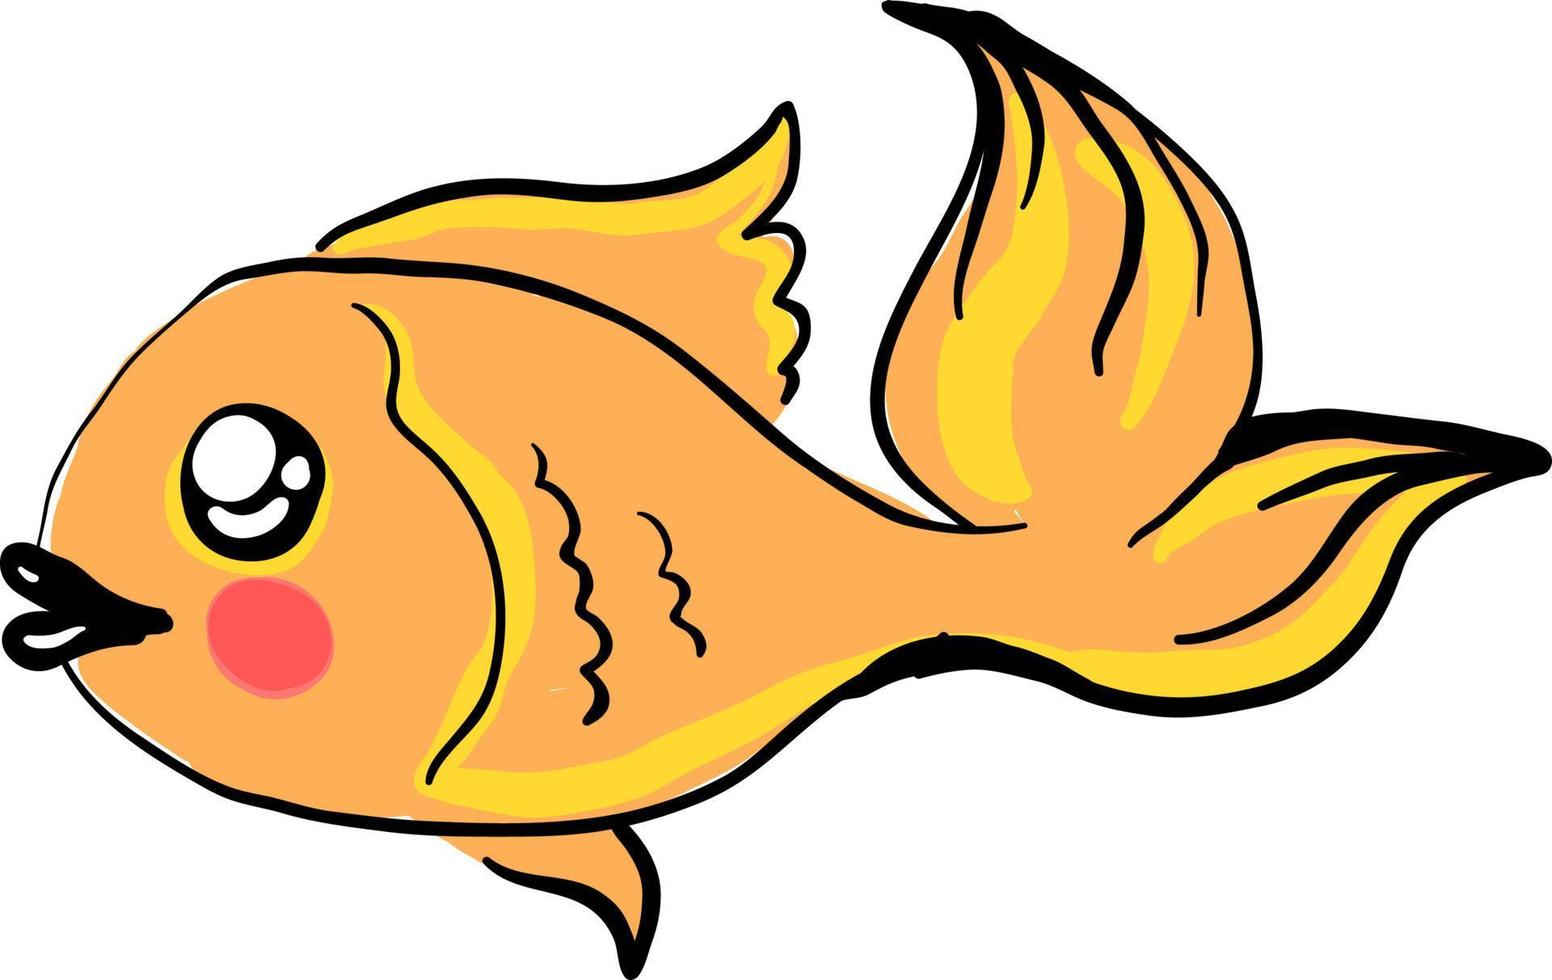 Golden fish, illustration, vector on white background.